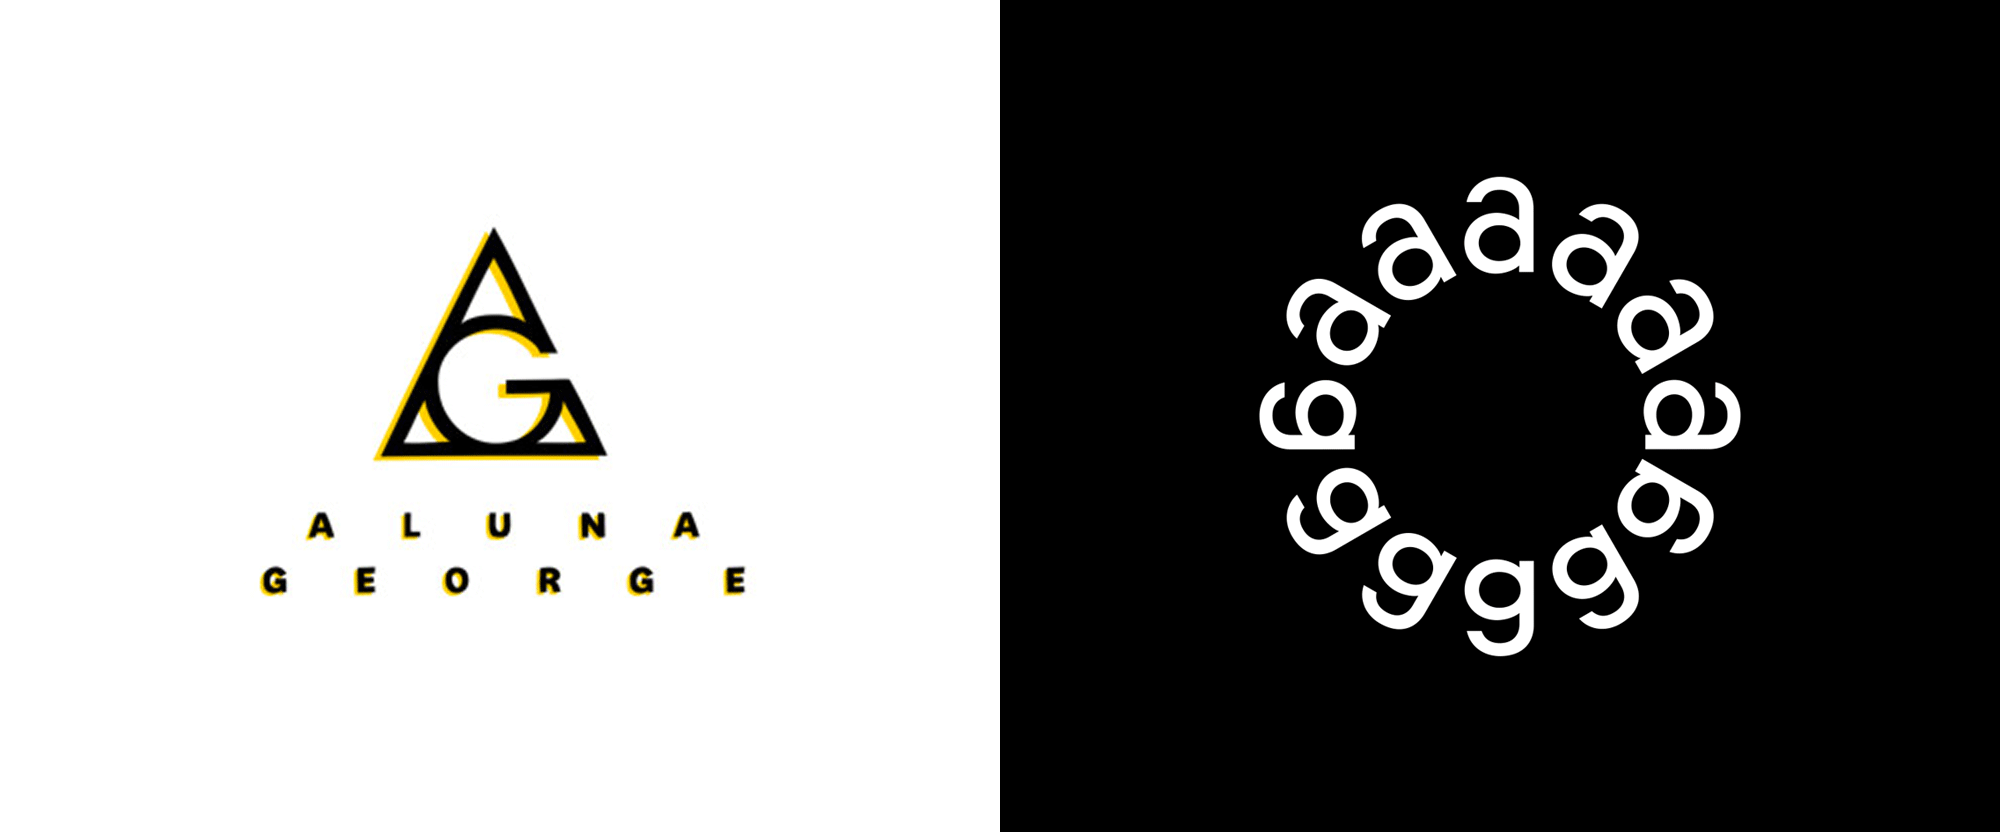 New Logo and Identity for AlunaGeorge by Acid Studio